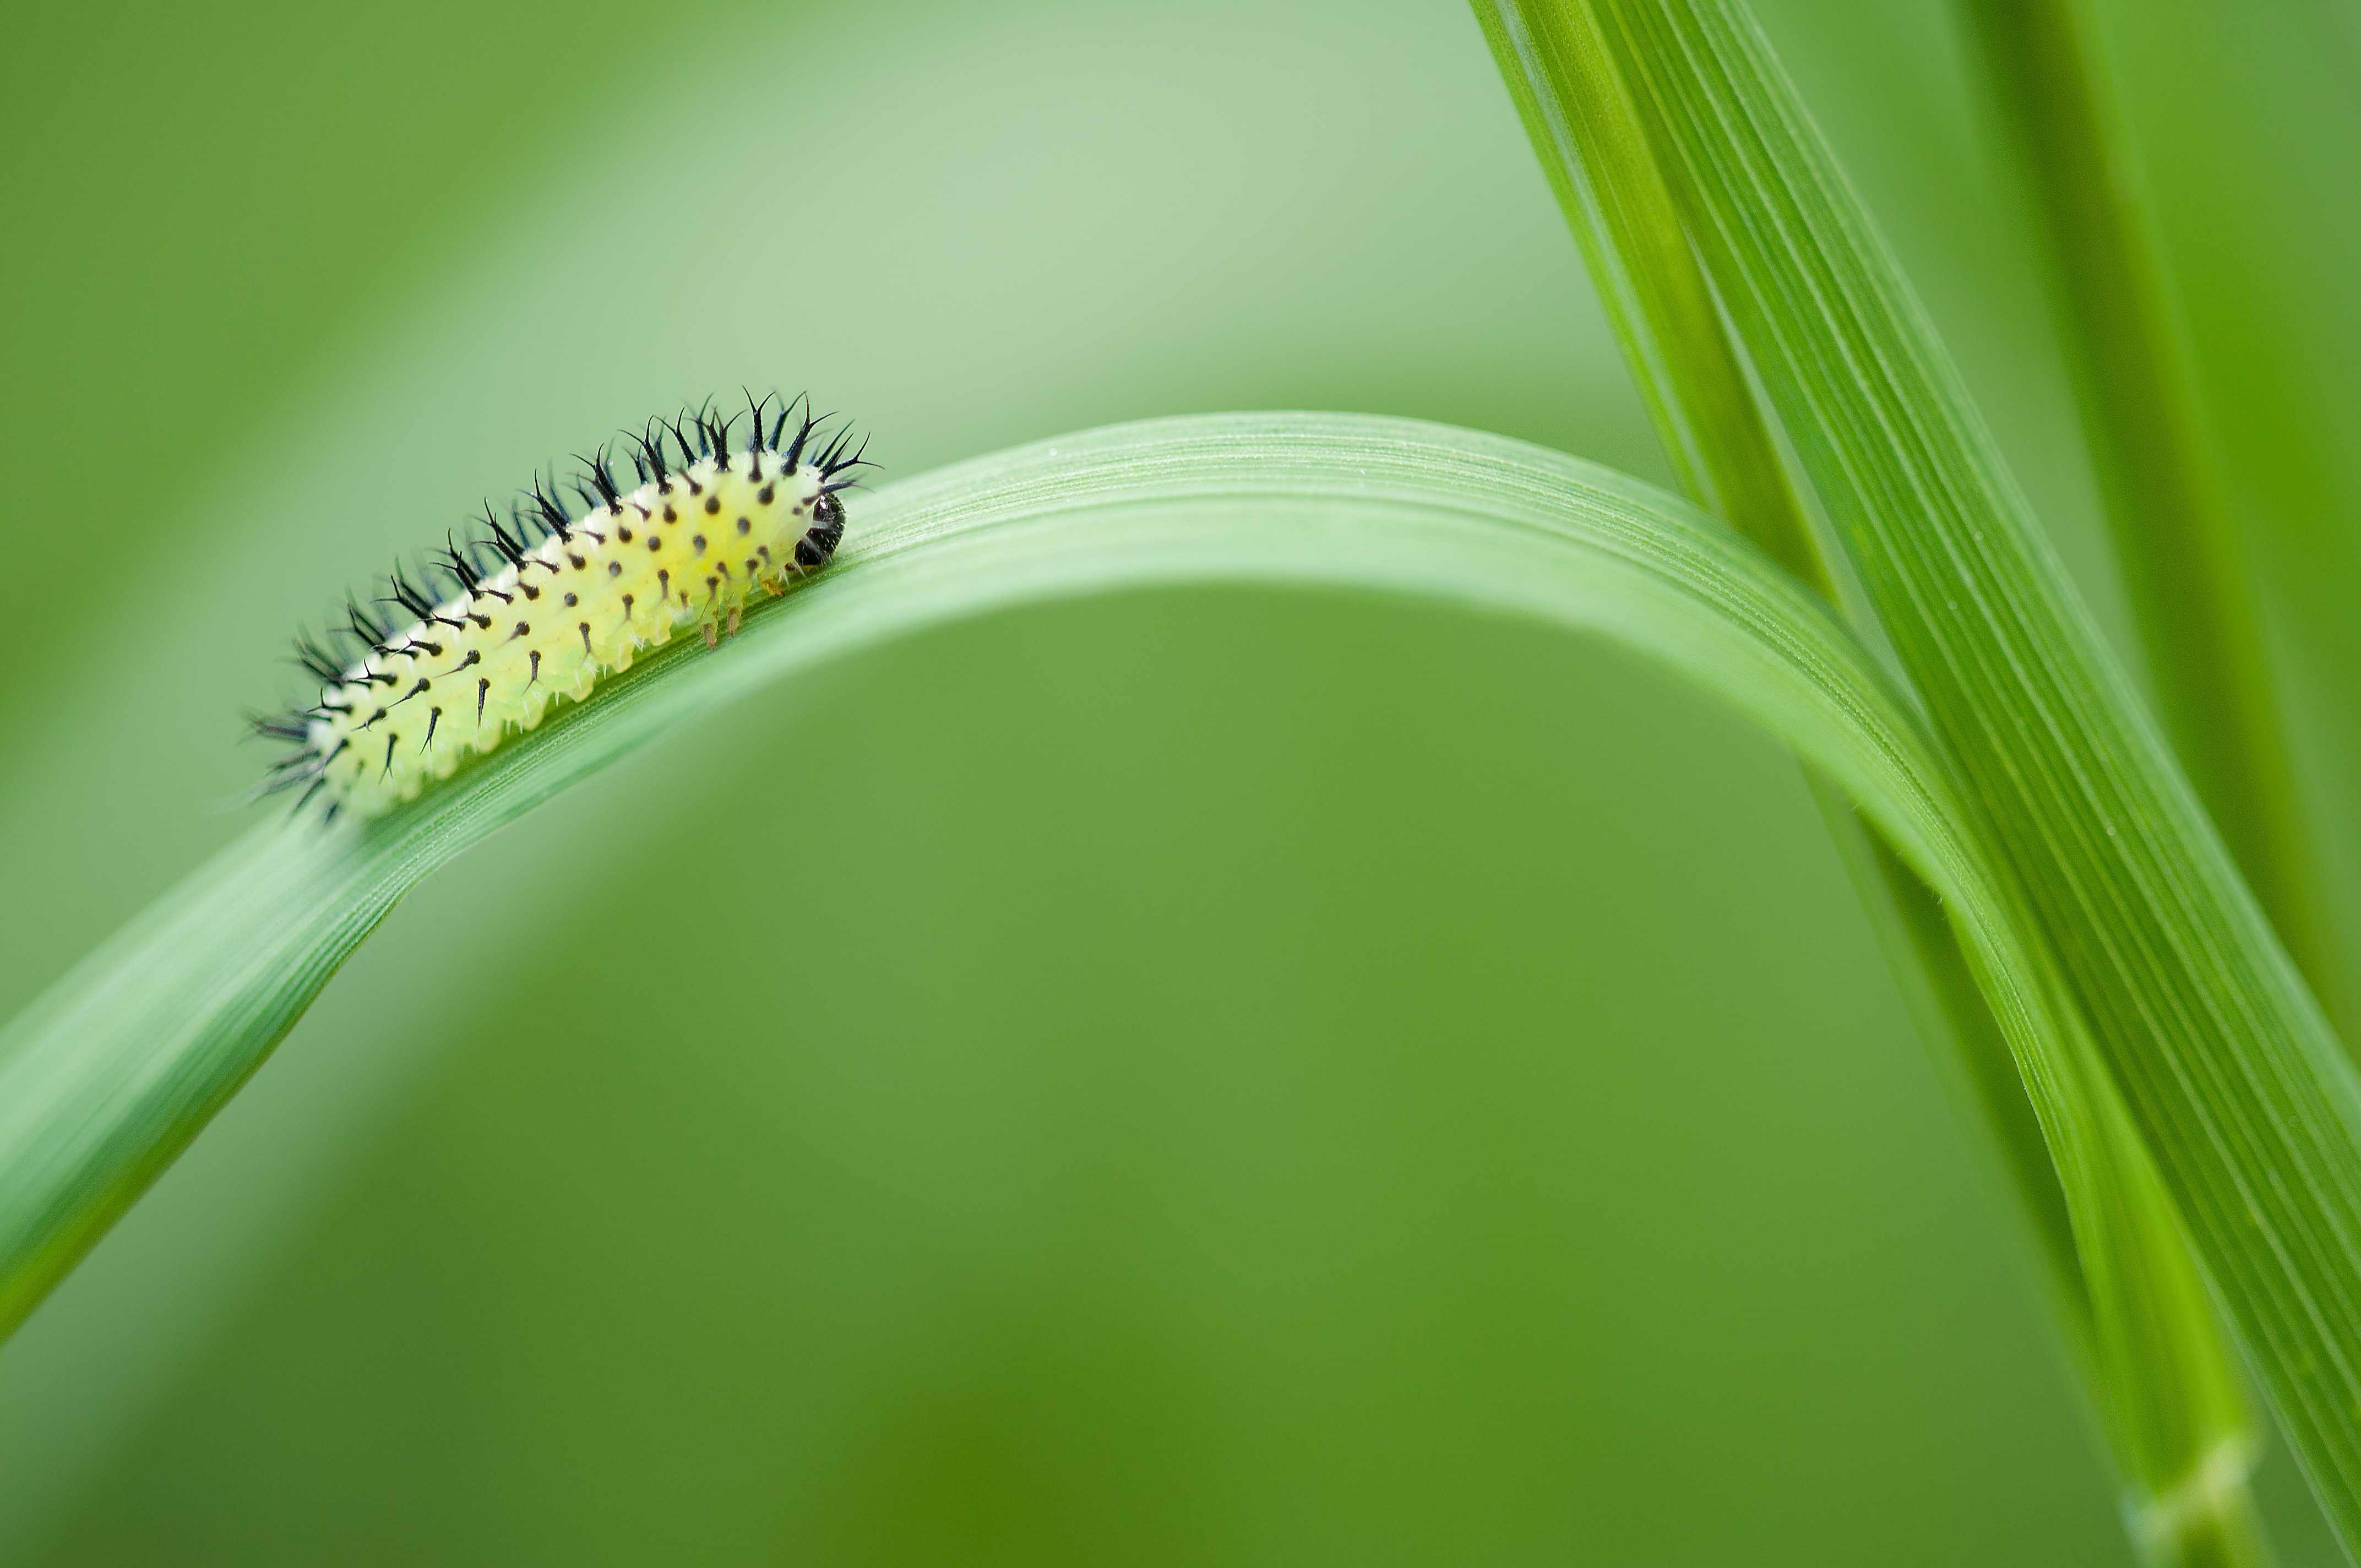 caterpillar on elongated leaf during daytime